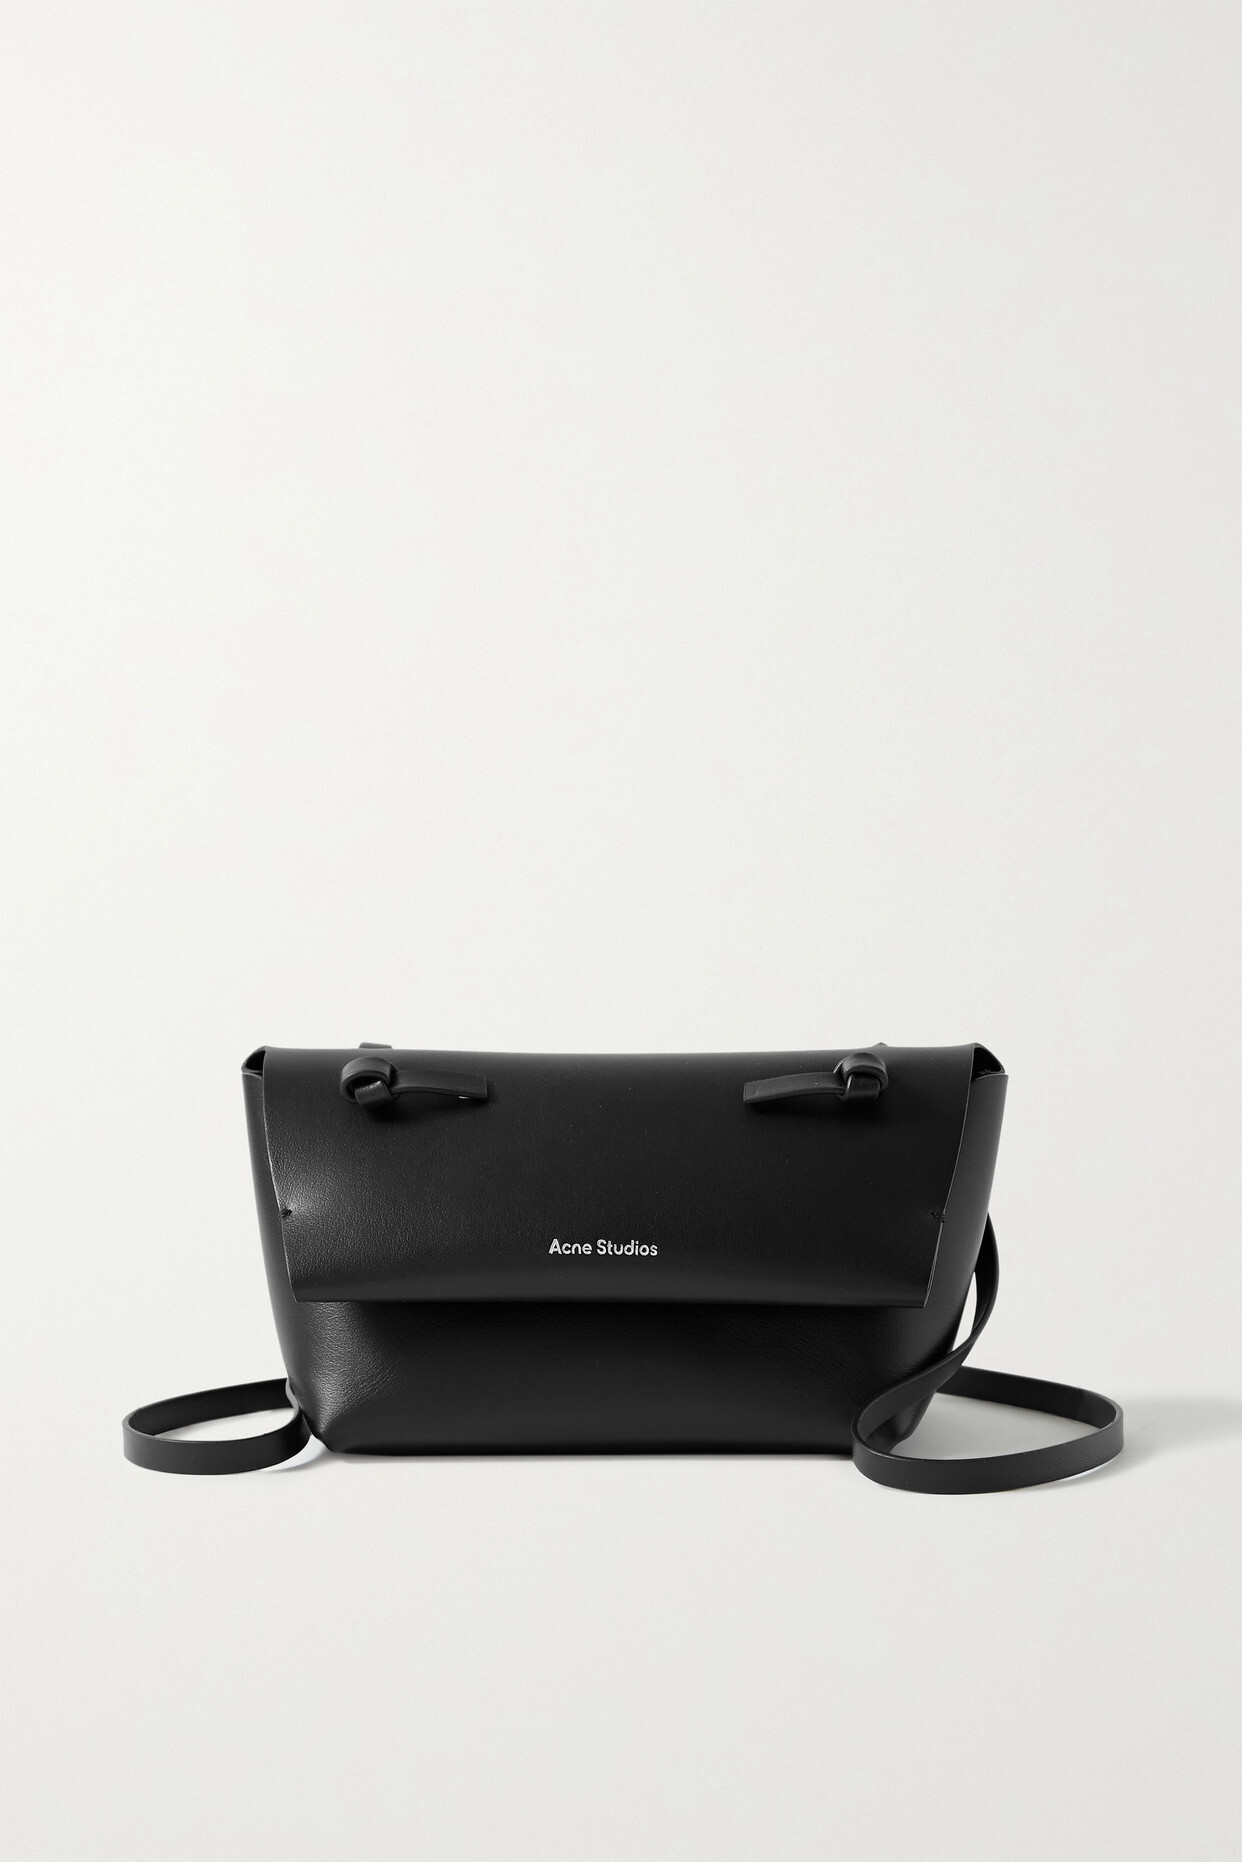 Acne Studios - Mini Leather Shoulder Bag - Black